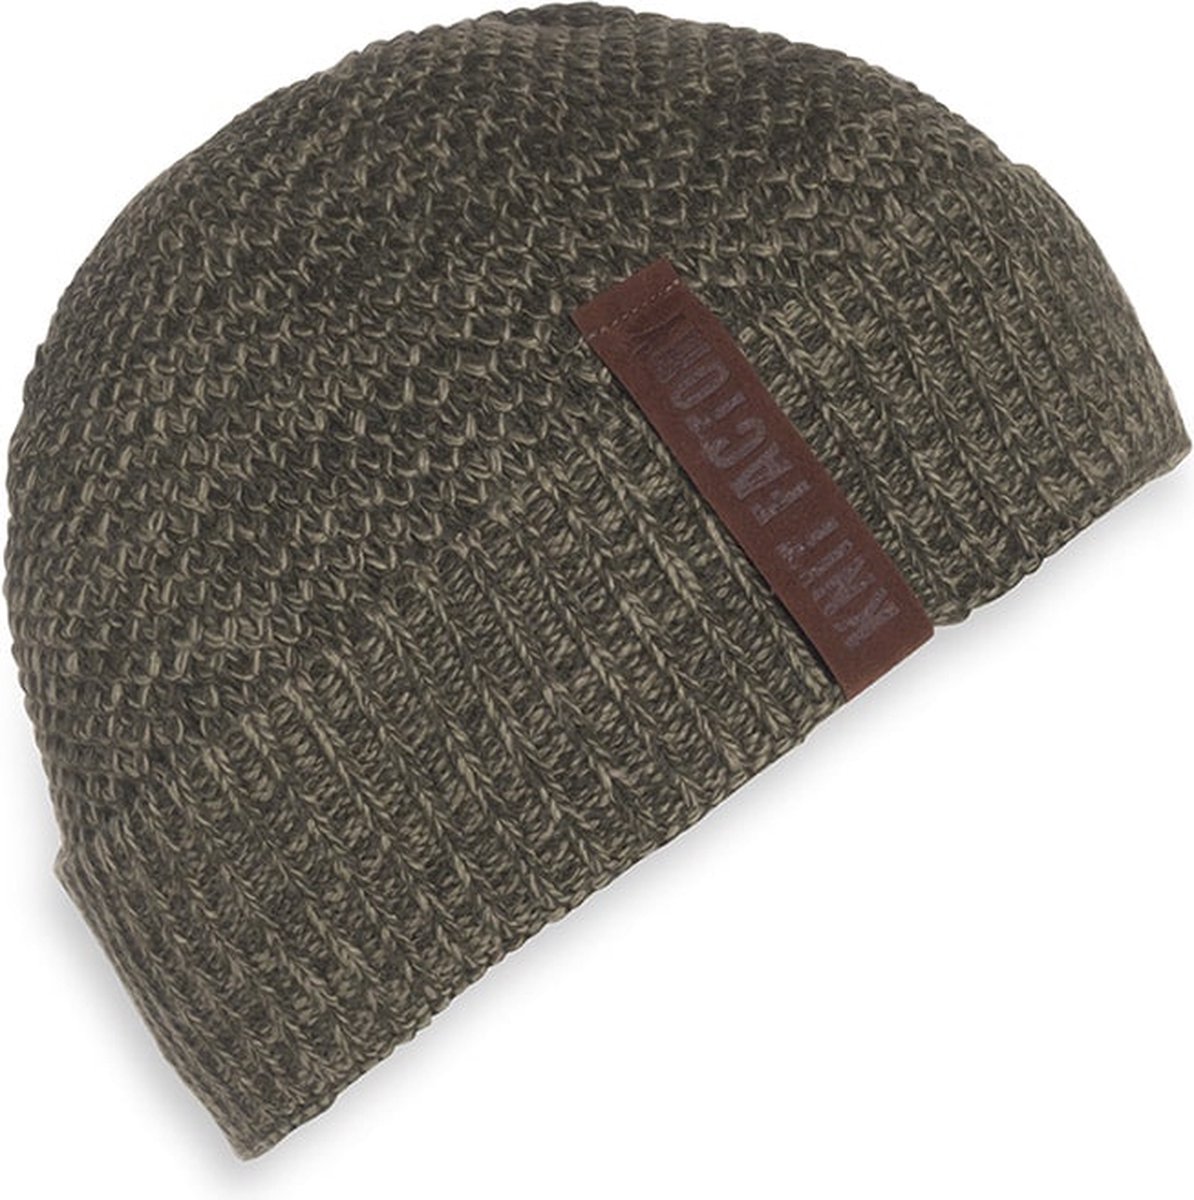 Knit Factory Jazz Gebreide Muts Heren & Dames - Beanie hat - Groen/Olive - Warme groen gemêleerde Wintermuts - Unisex - One Size